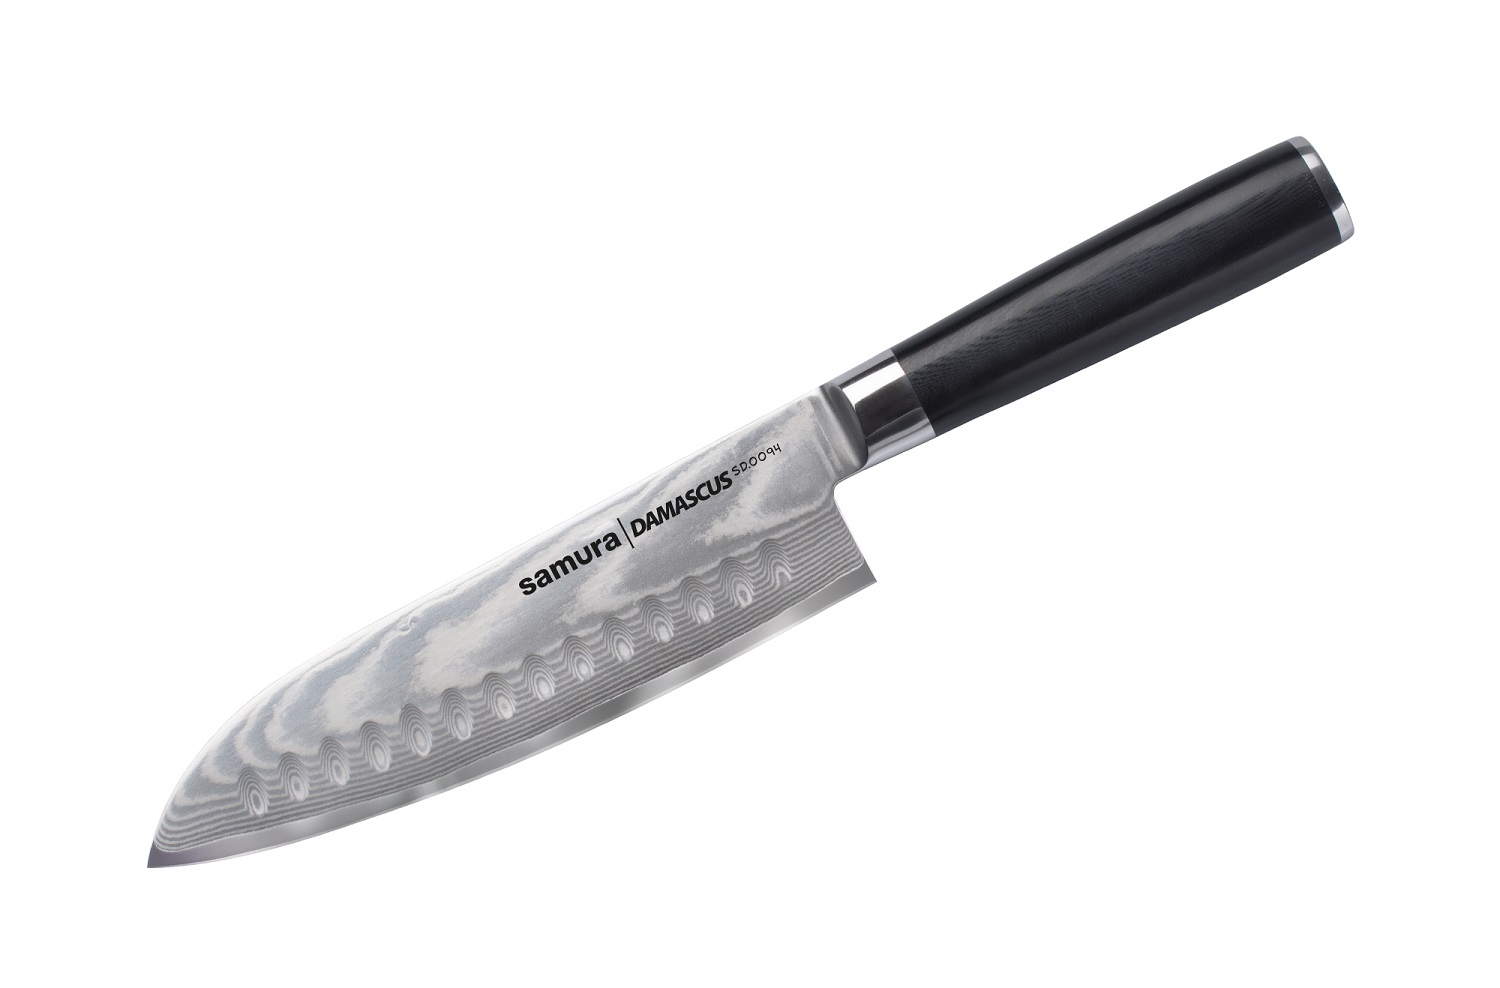 Нож Samura сантоку Damascus, 18 см, G-10, дамаск 67 слоев нож samura 67 гранд шеф 24 см дамаск 67 слоев микарта